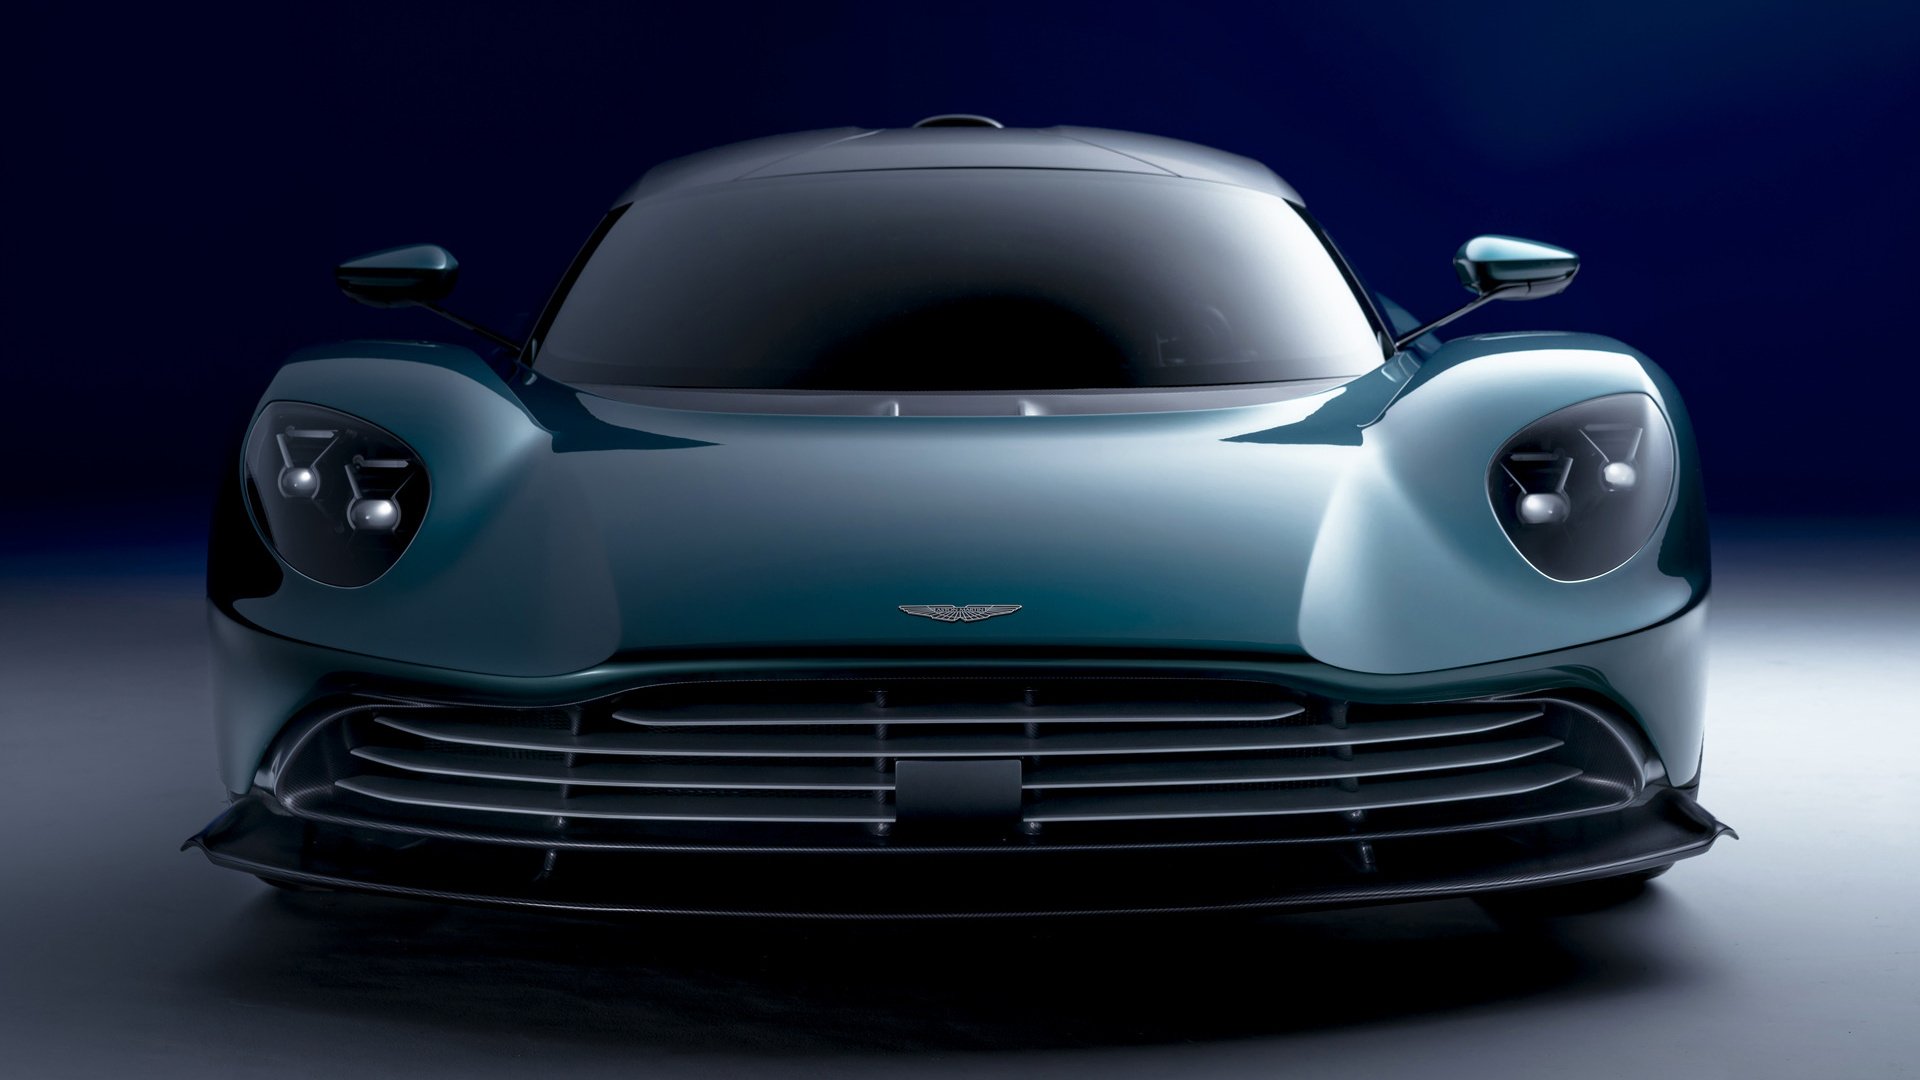 2022 Aston Martin Valhalla and HD Image